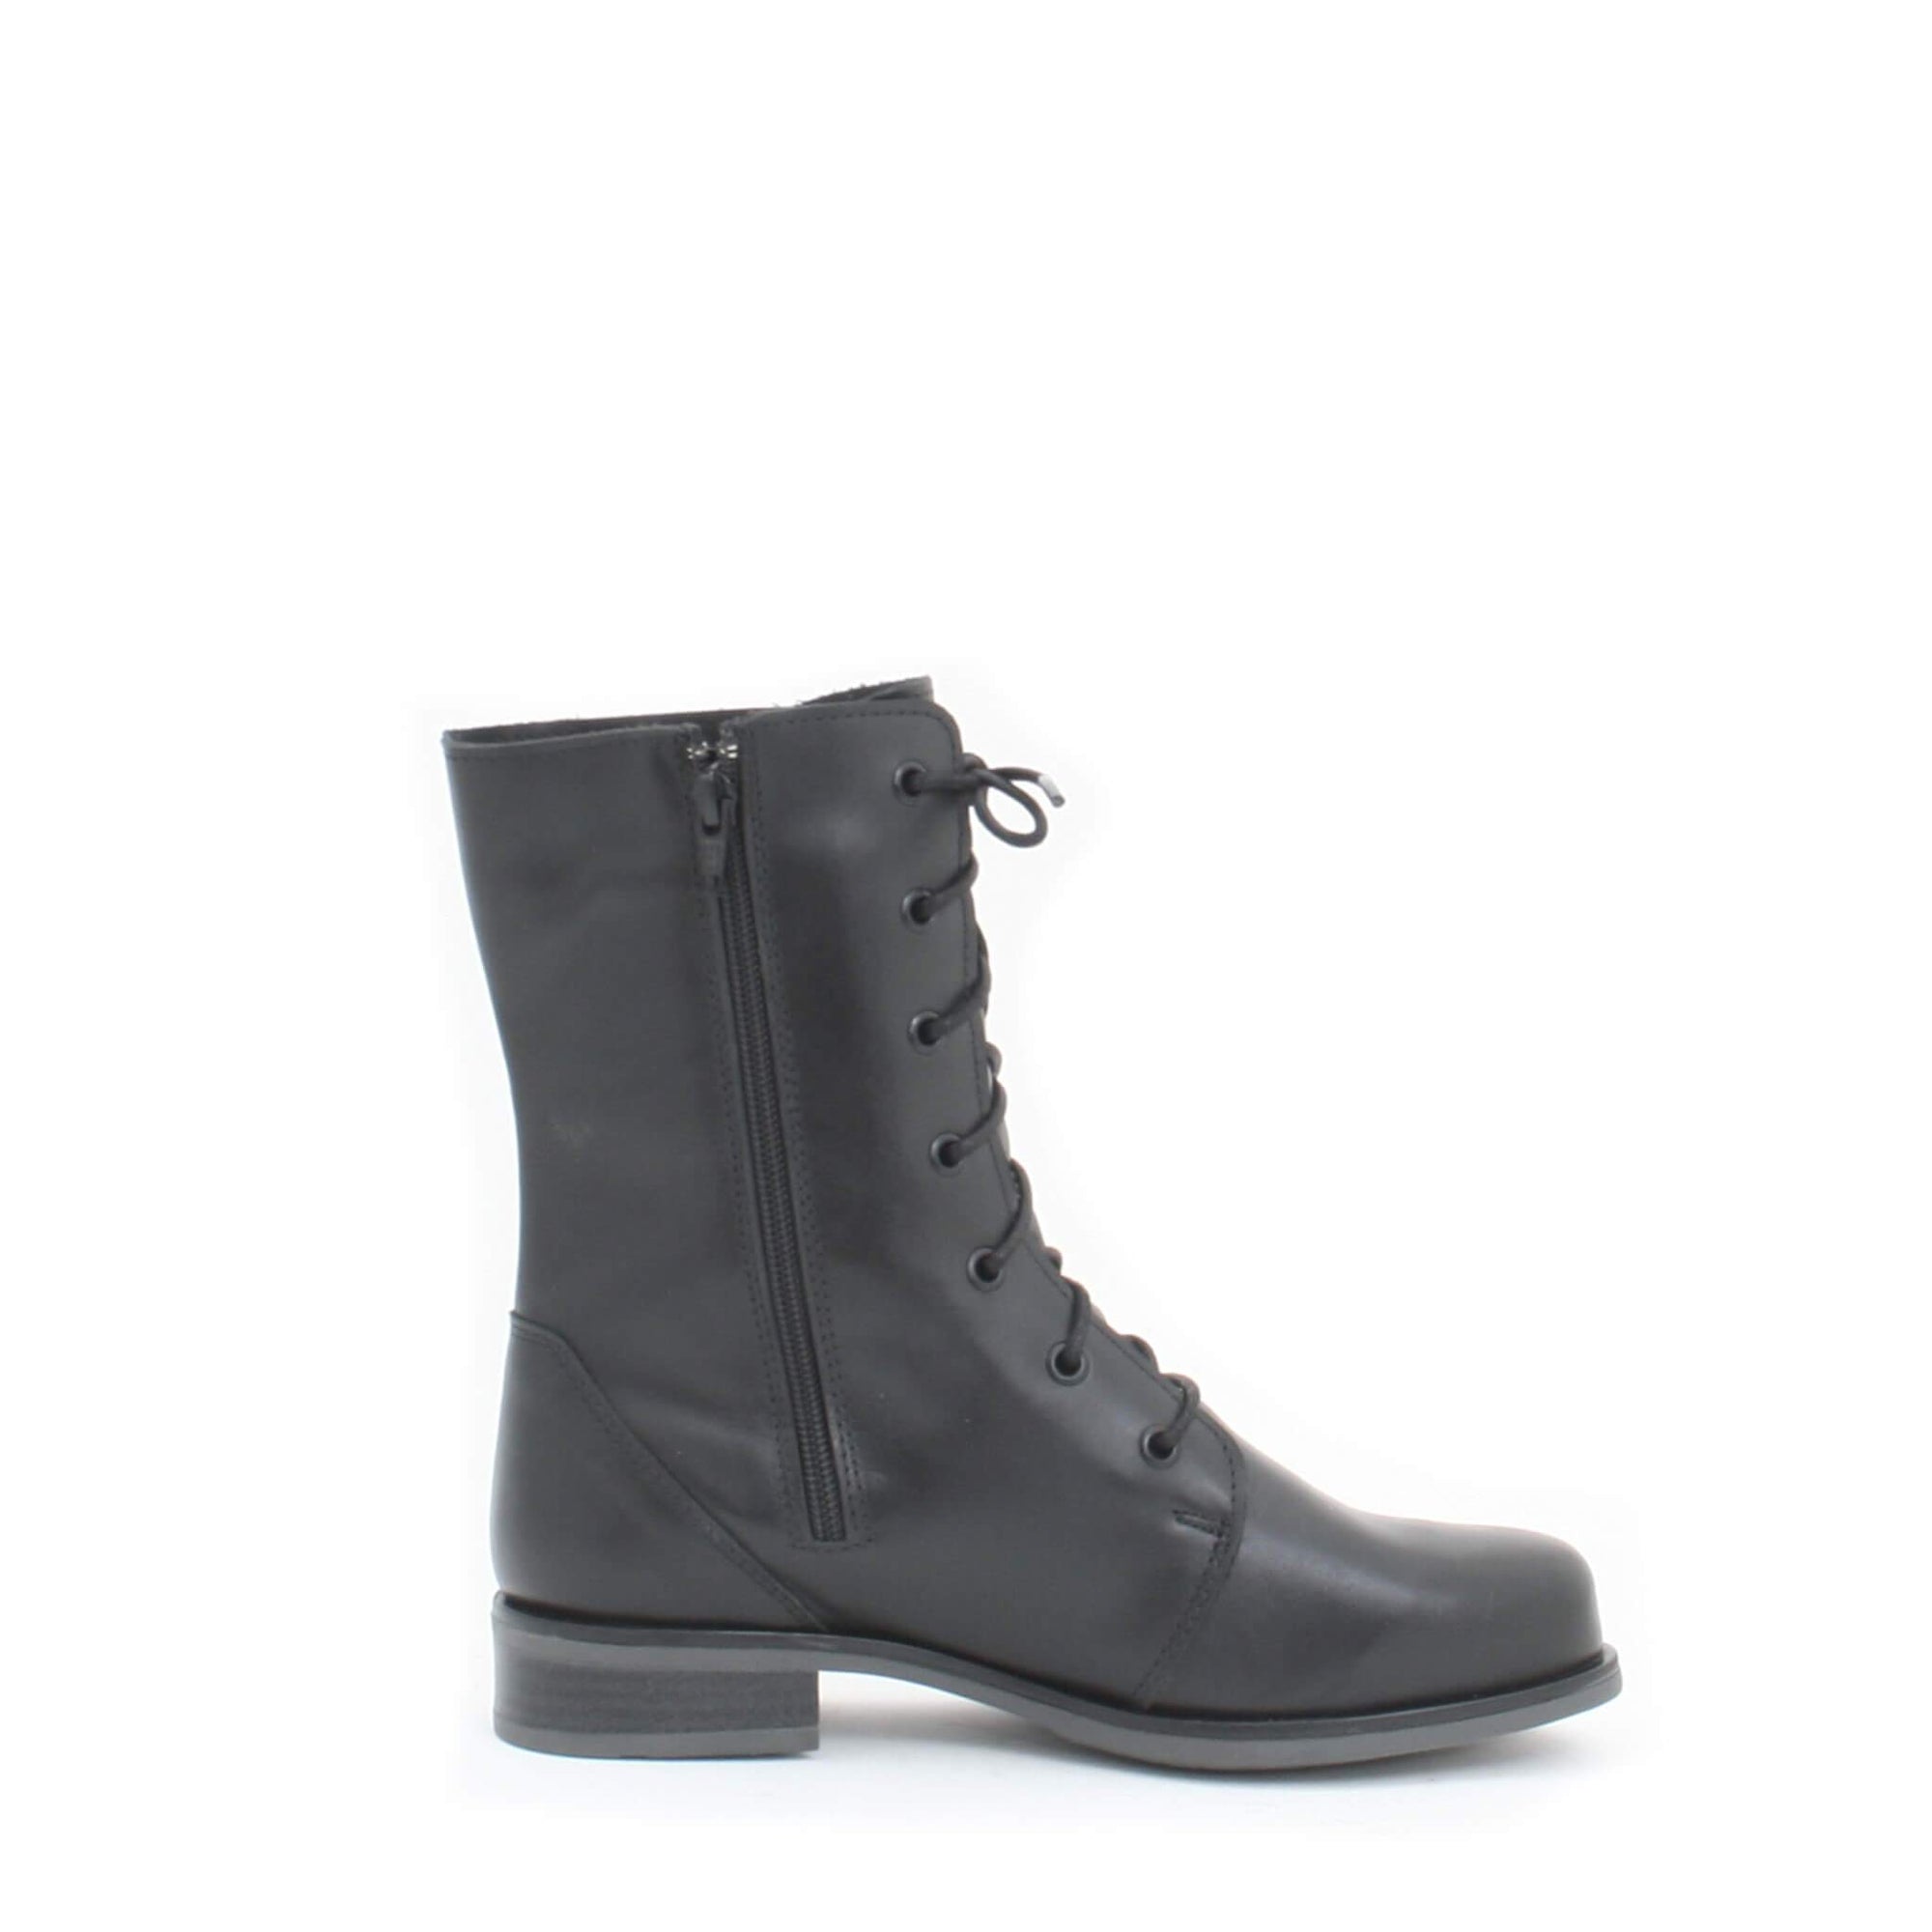 Merry winter boot for women - Black